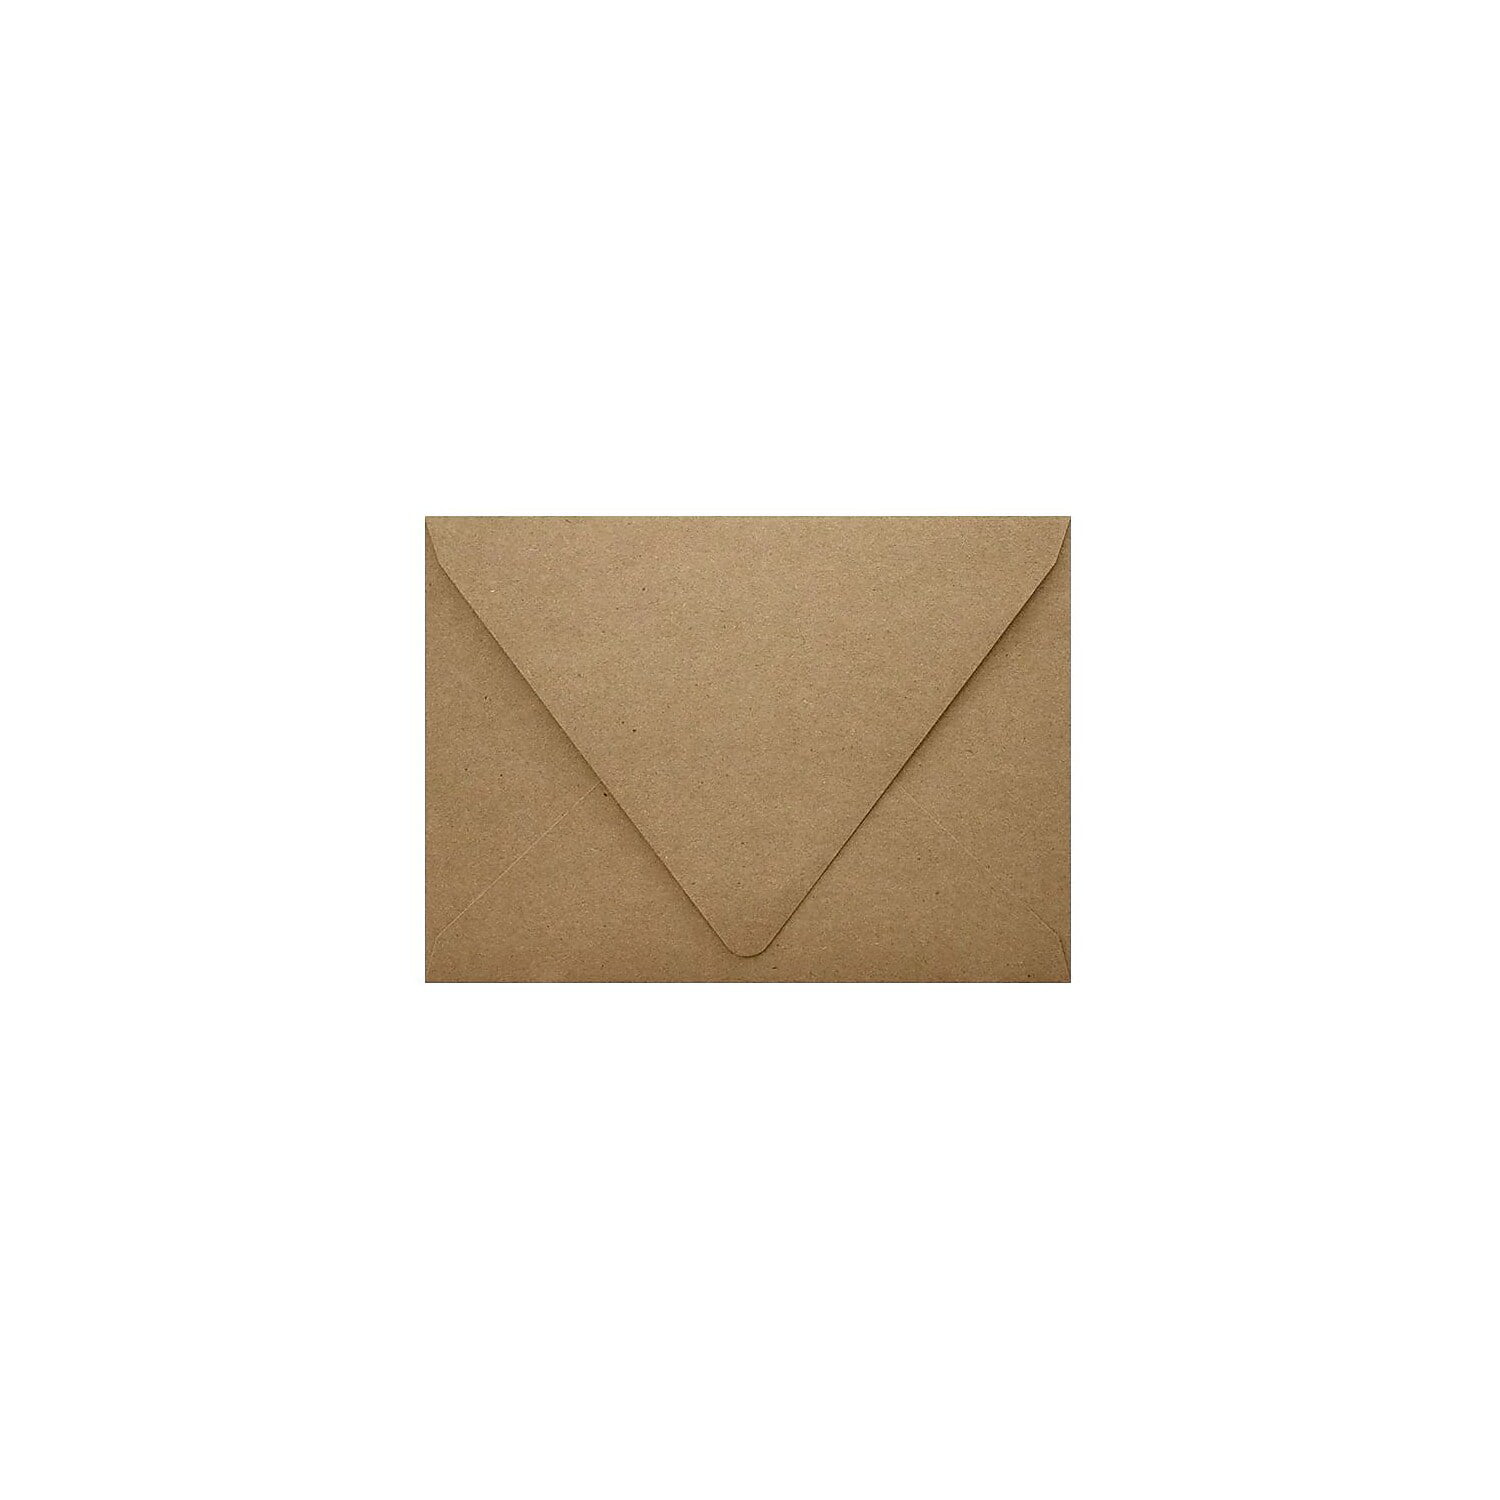 Luxury pack 50 shimmer envelopes in red 6.75 x 6.75in 